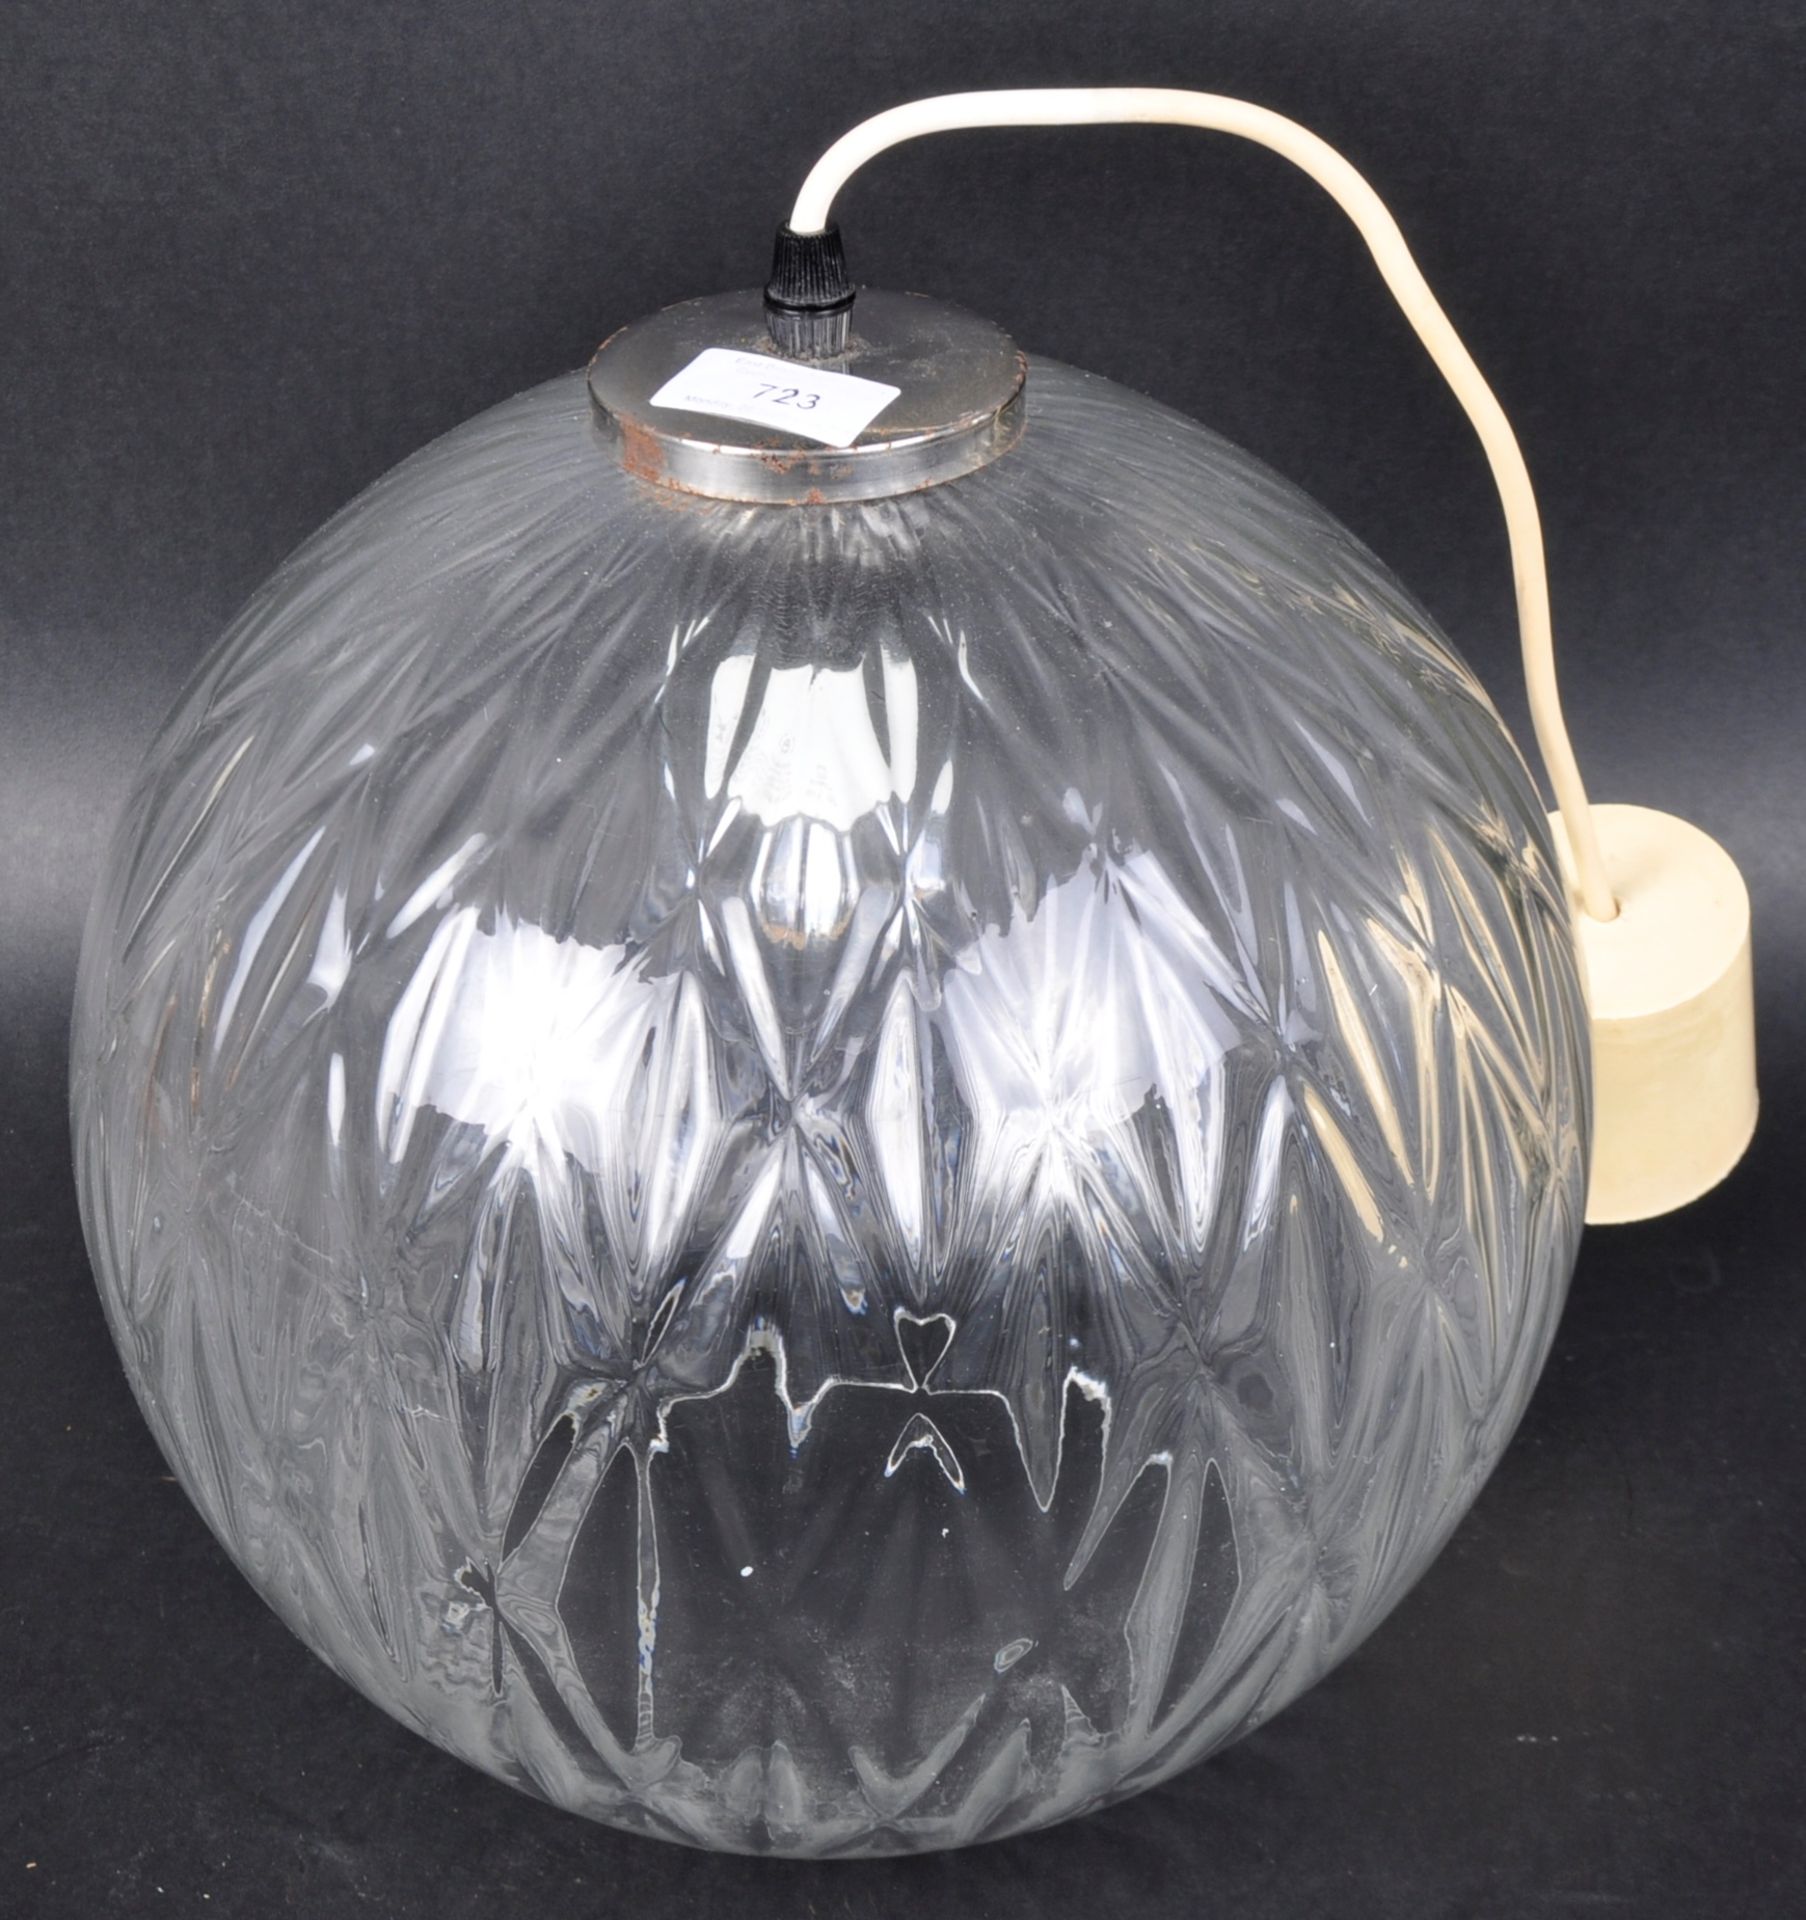 RETRO VINTAGE DANISH GLASS BALL LAMP - Image 2 of 5